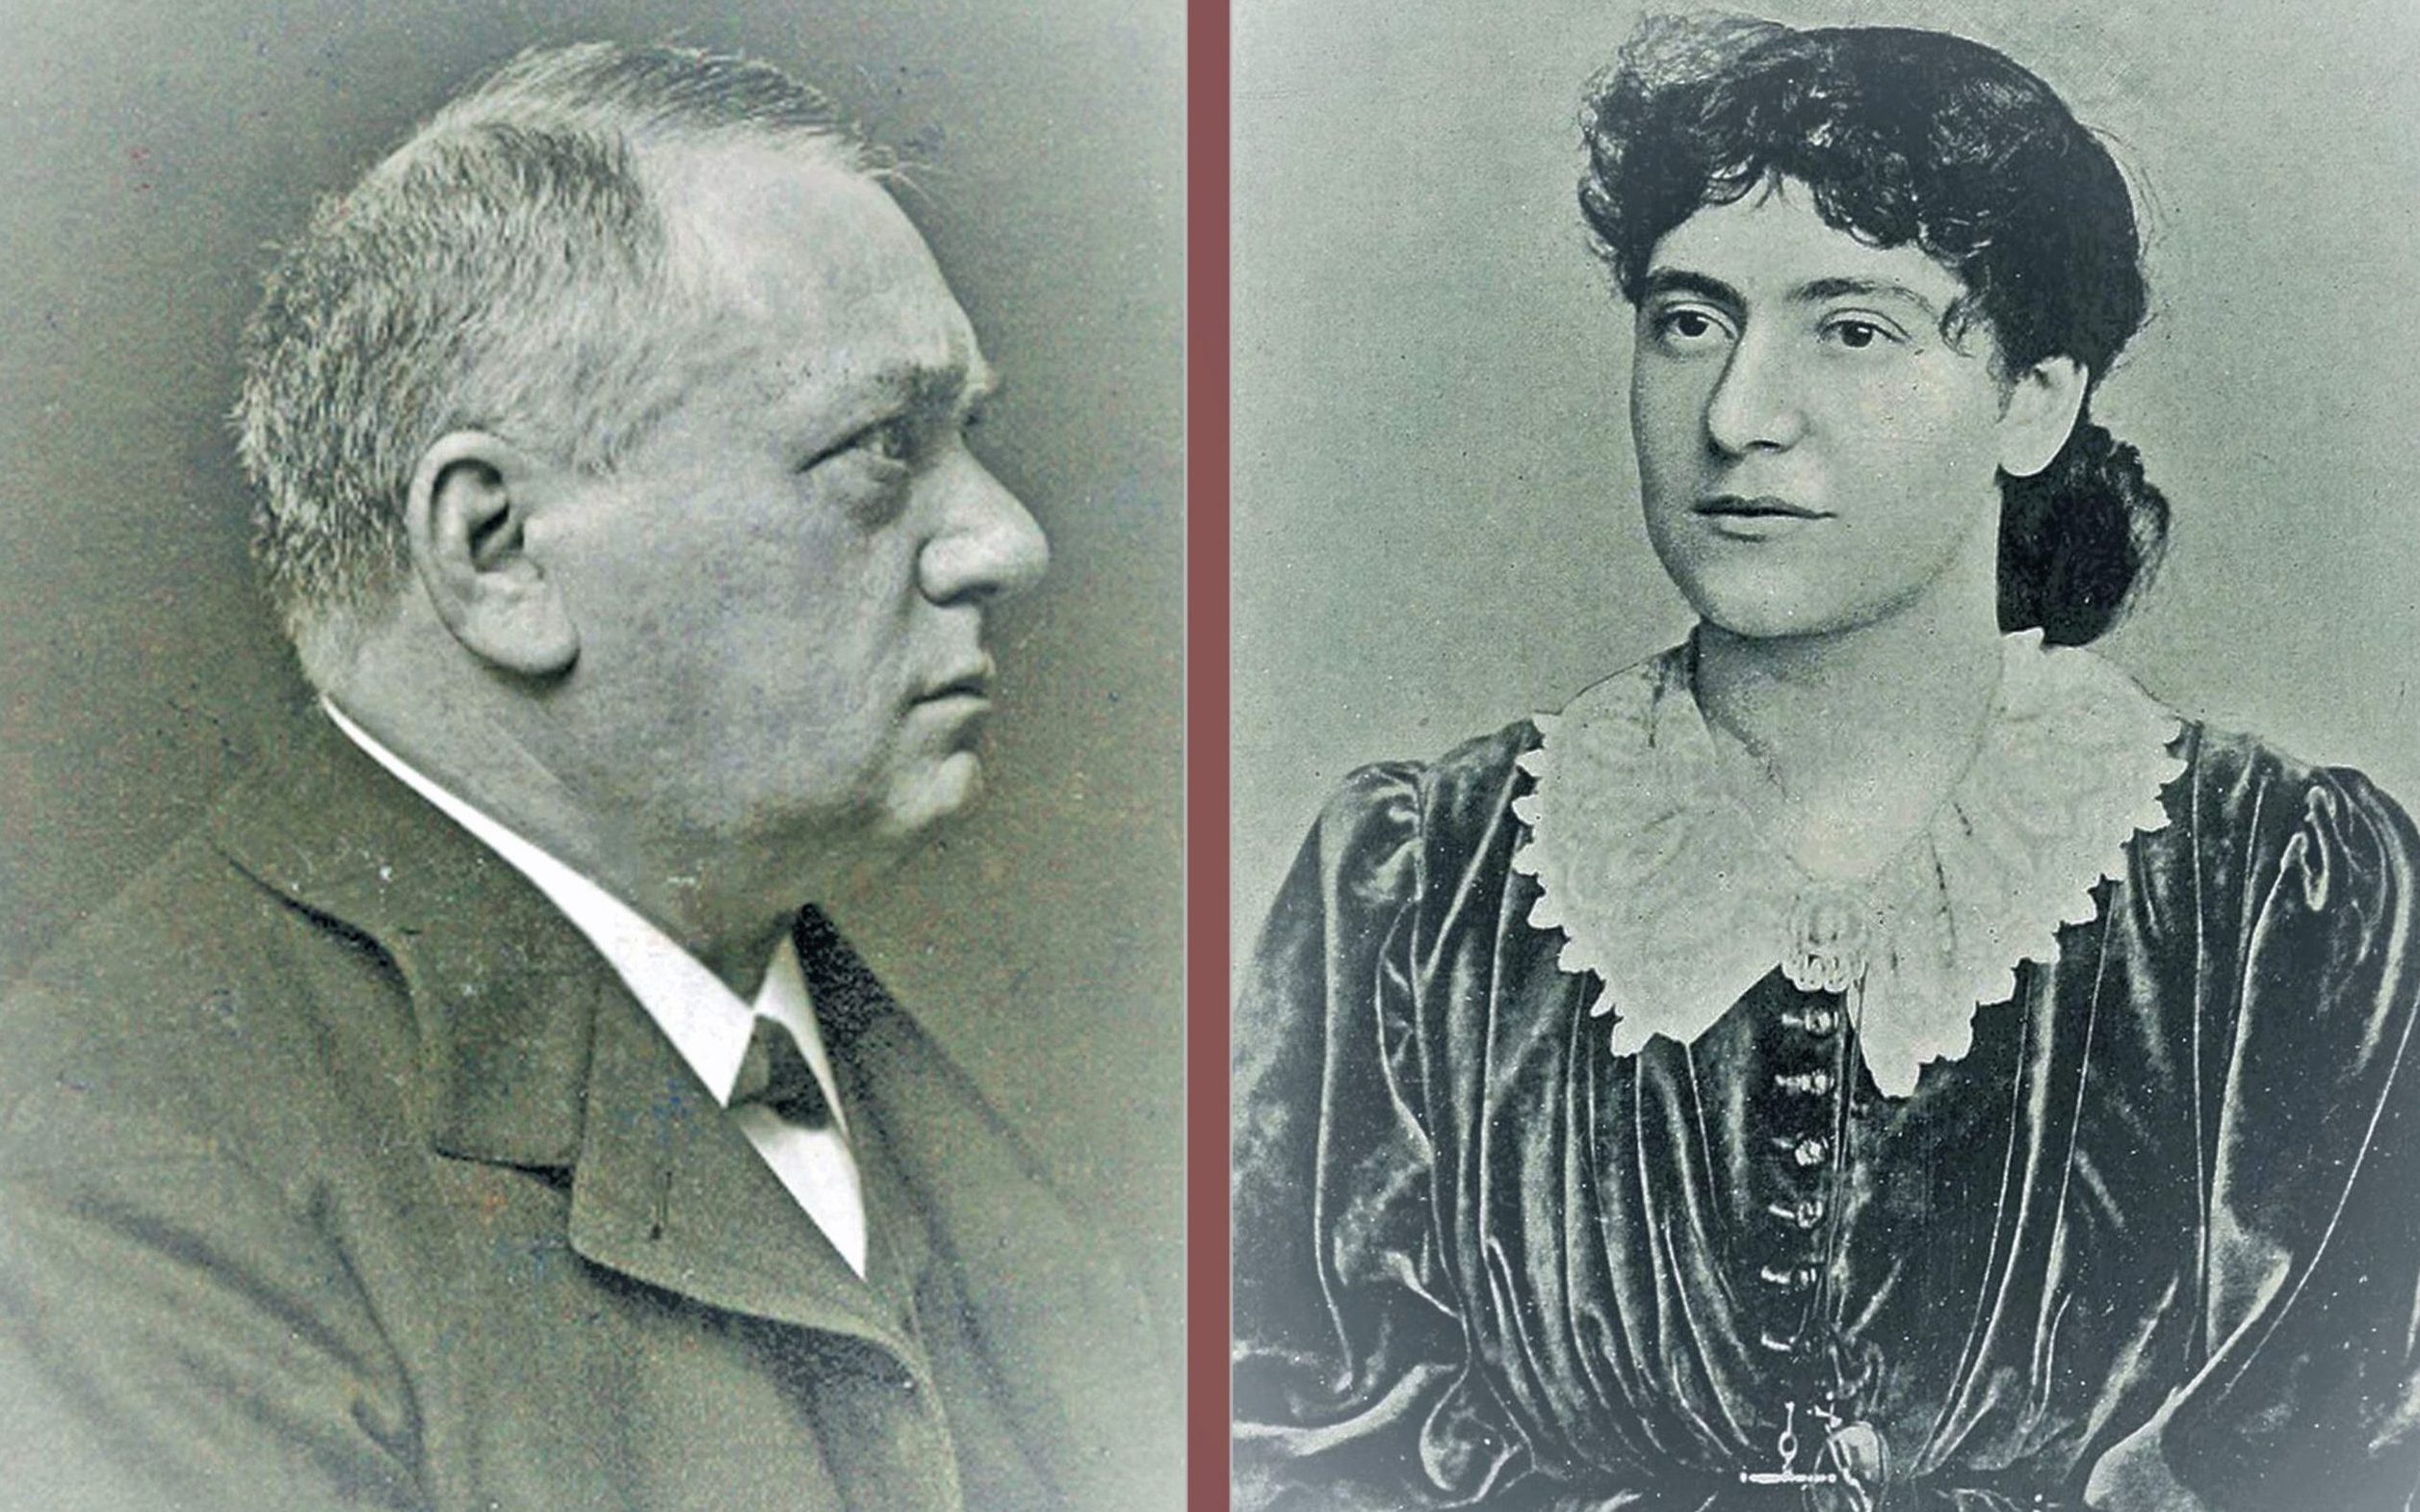 Porträts Karl Höger und Eleanor Marx Aveling